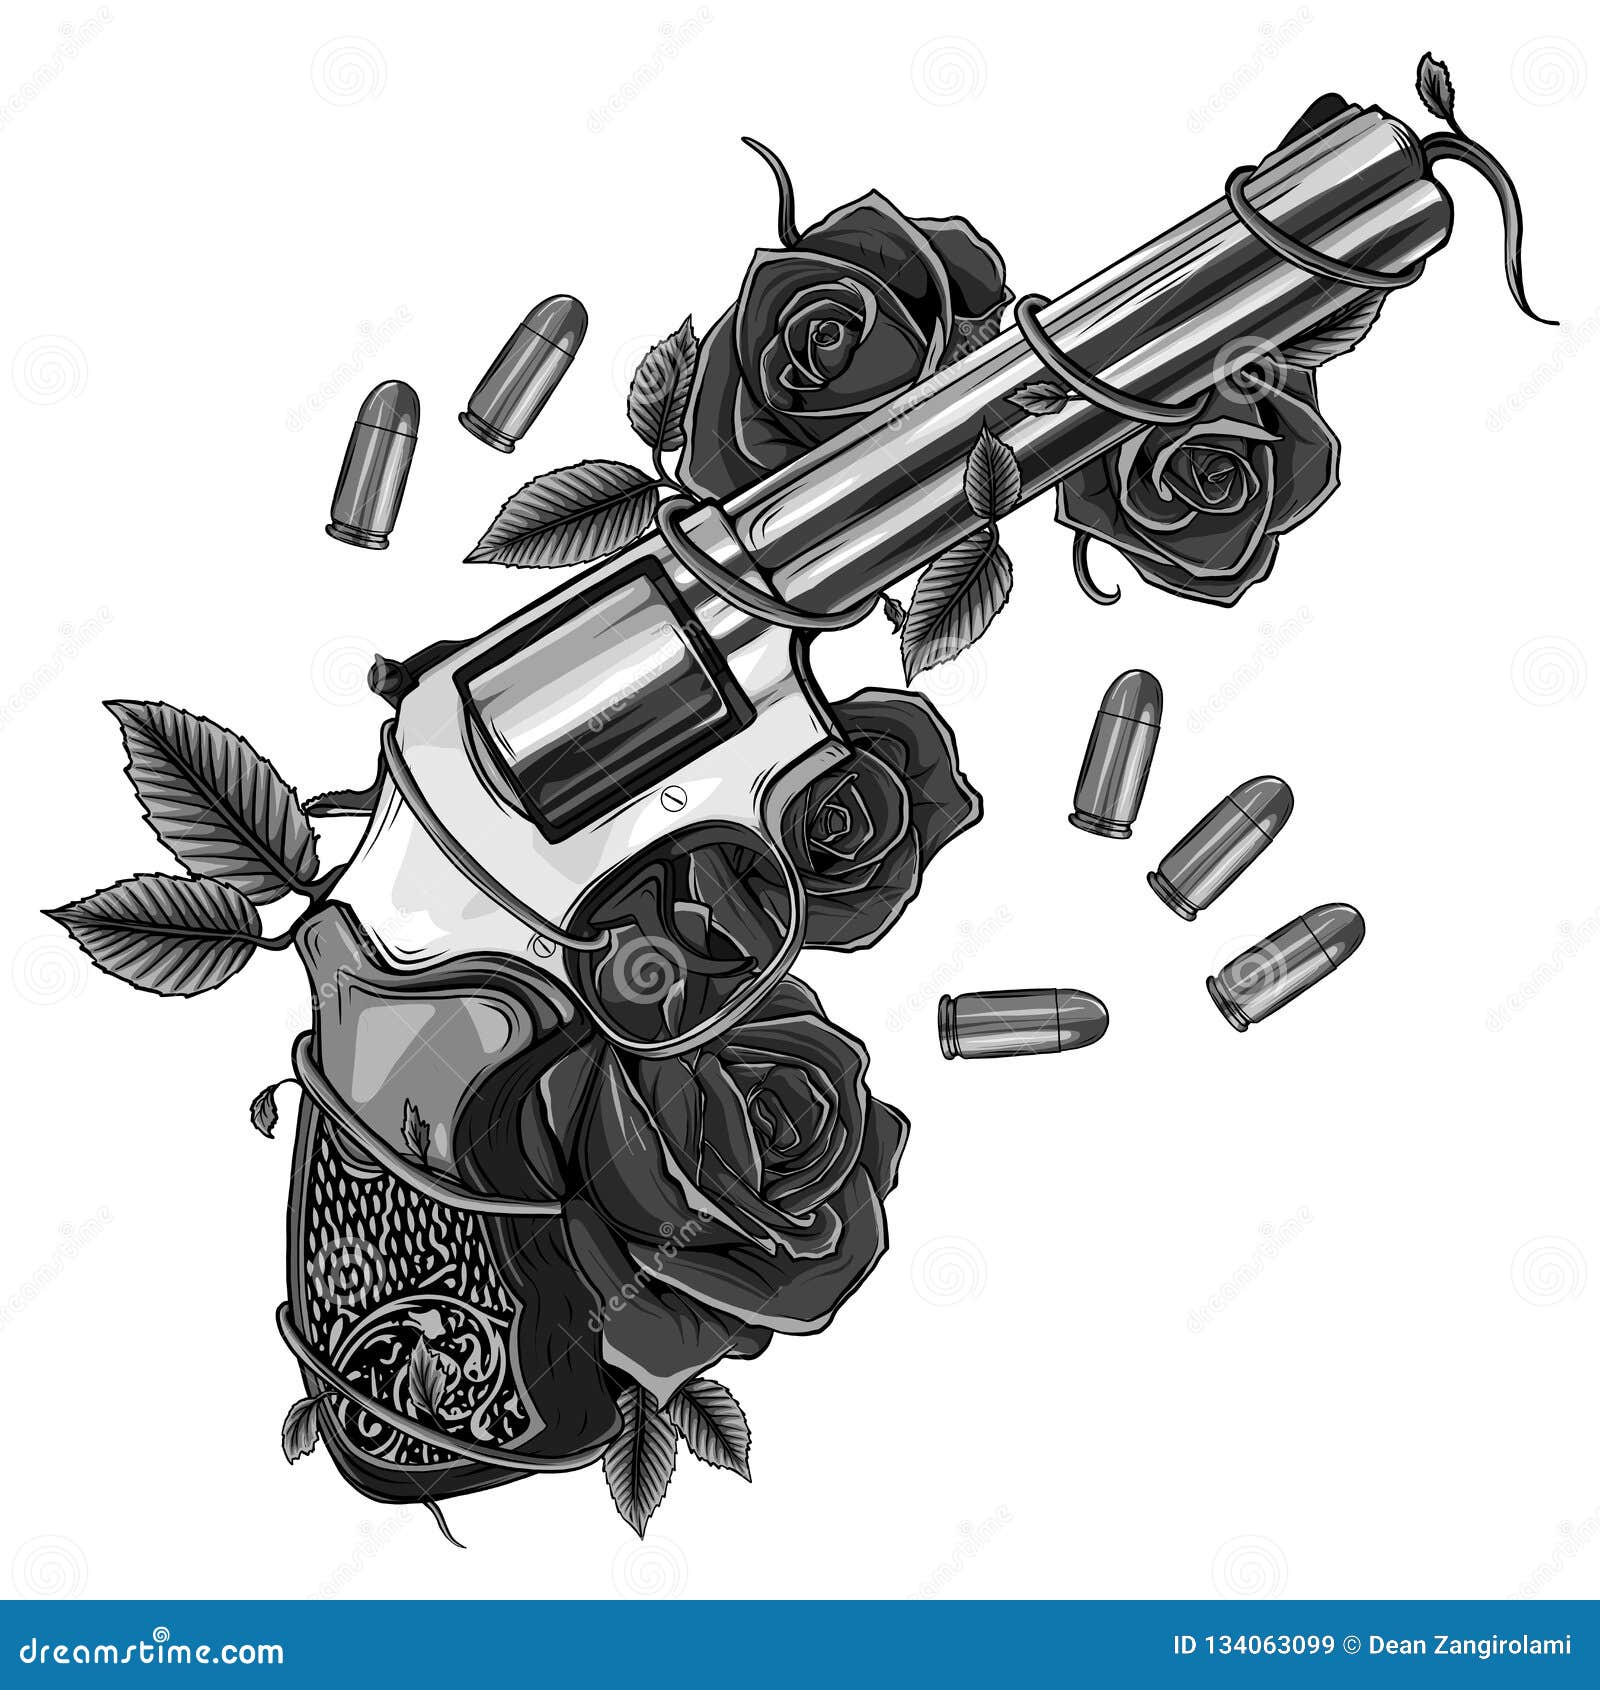 1450 Gun Rose Tattoo Images Stock Photos  Vectors  Shutterstock